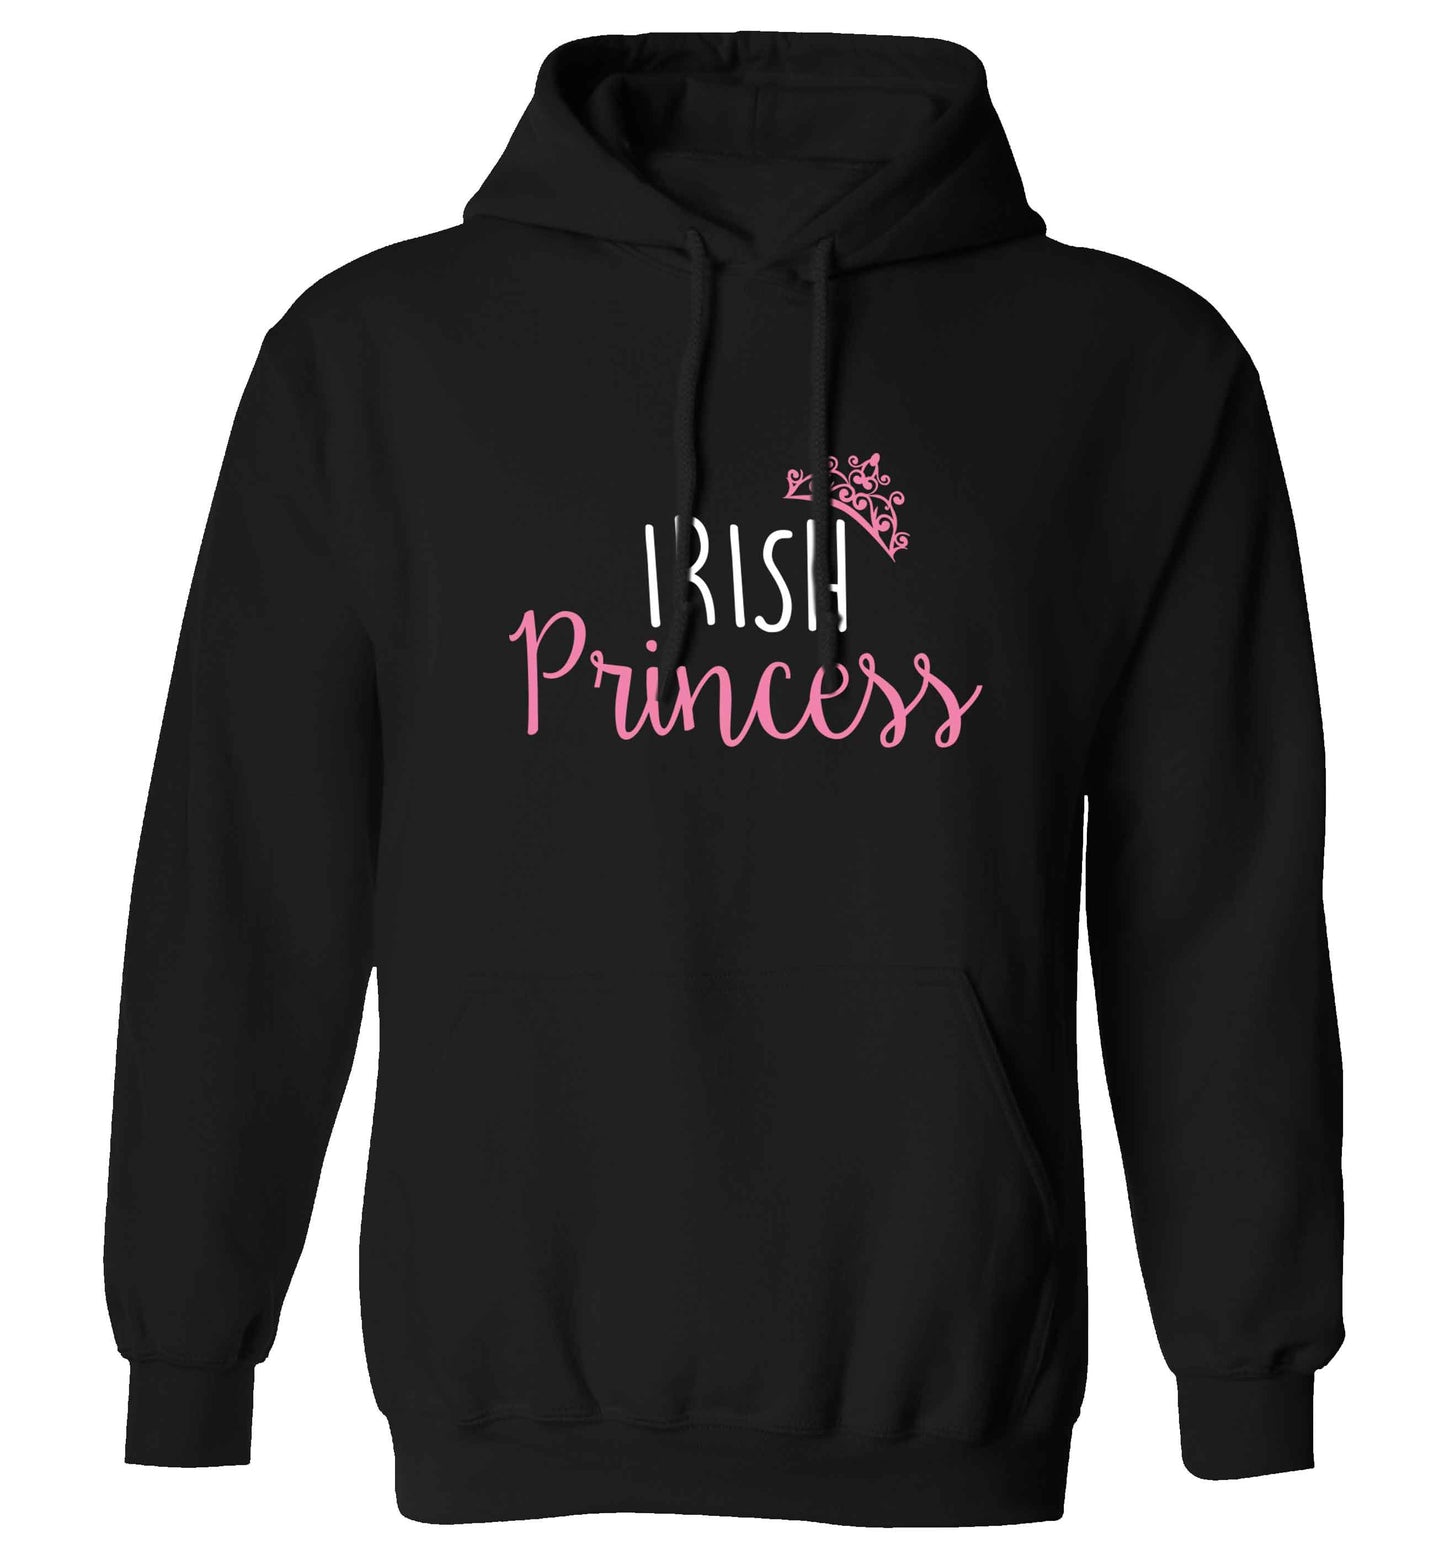 Irish princess adults unisex black hoodie 2XL